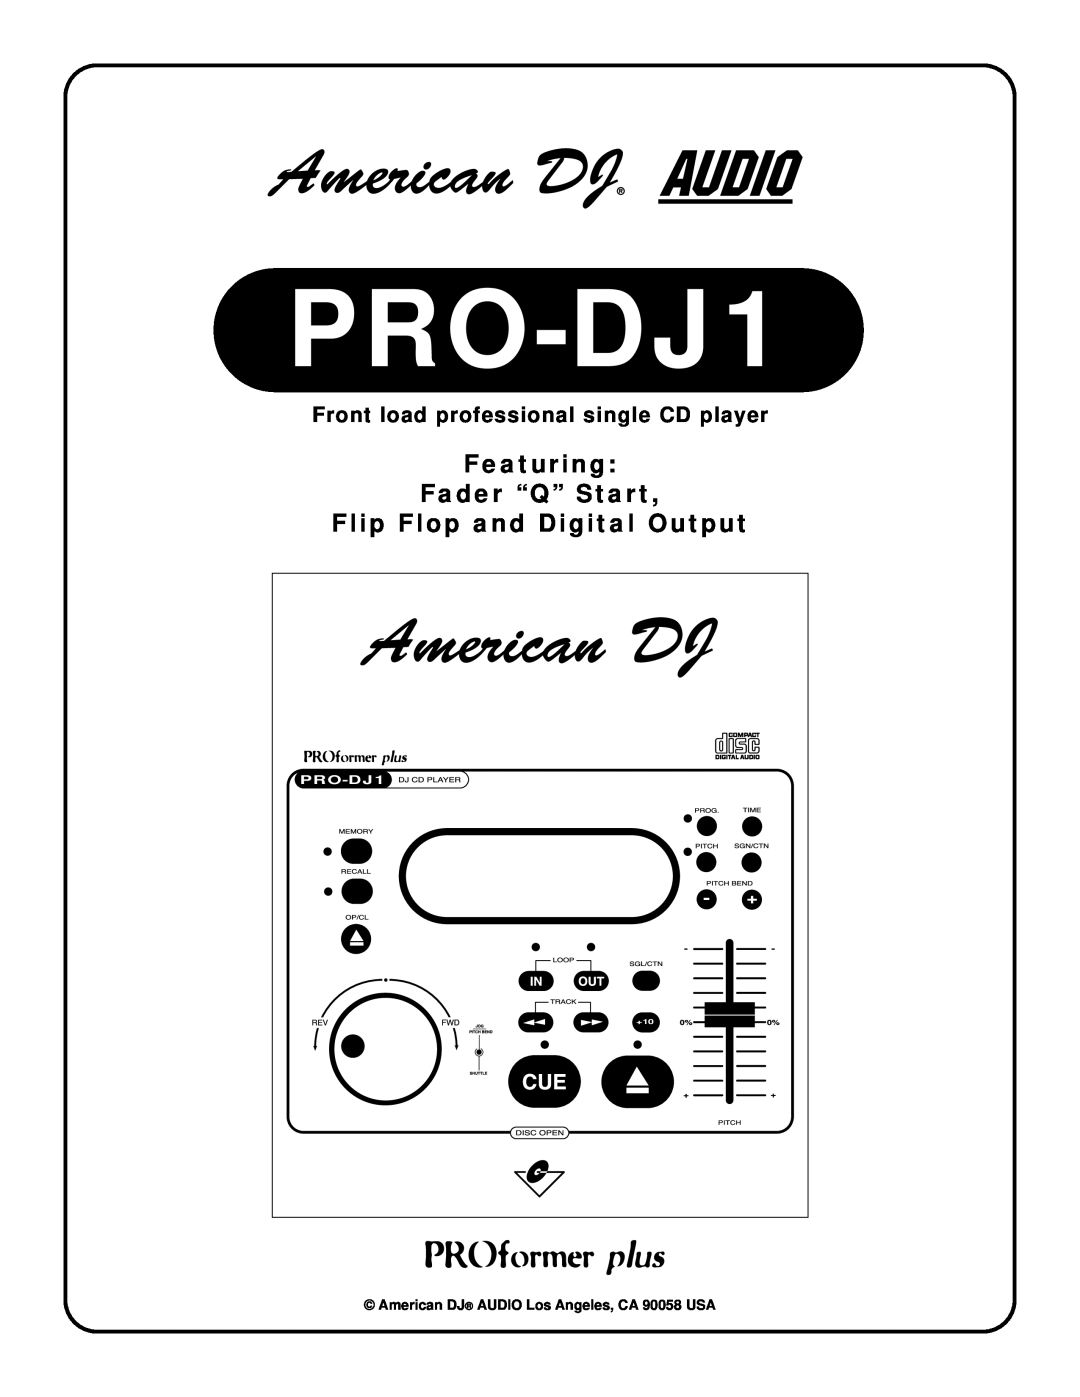 American DJ PRO-DJ1 manual Front load professional single CD player, Featuring Fader “Q” Start 